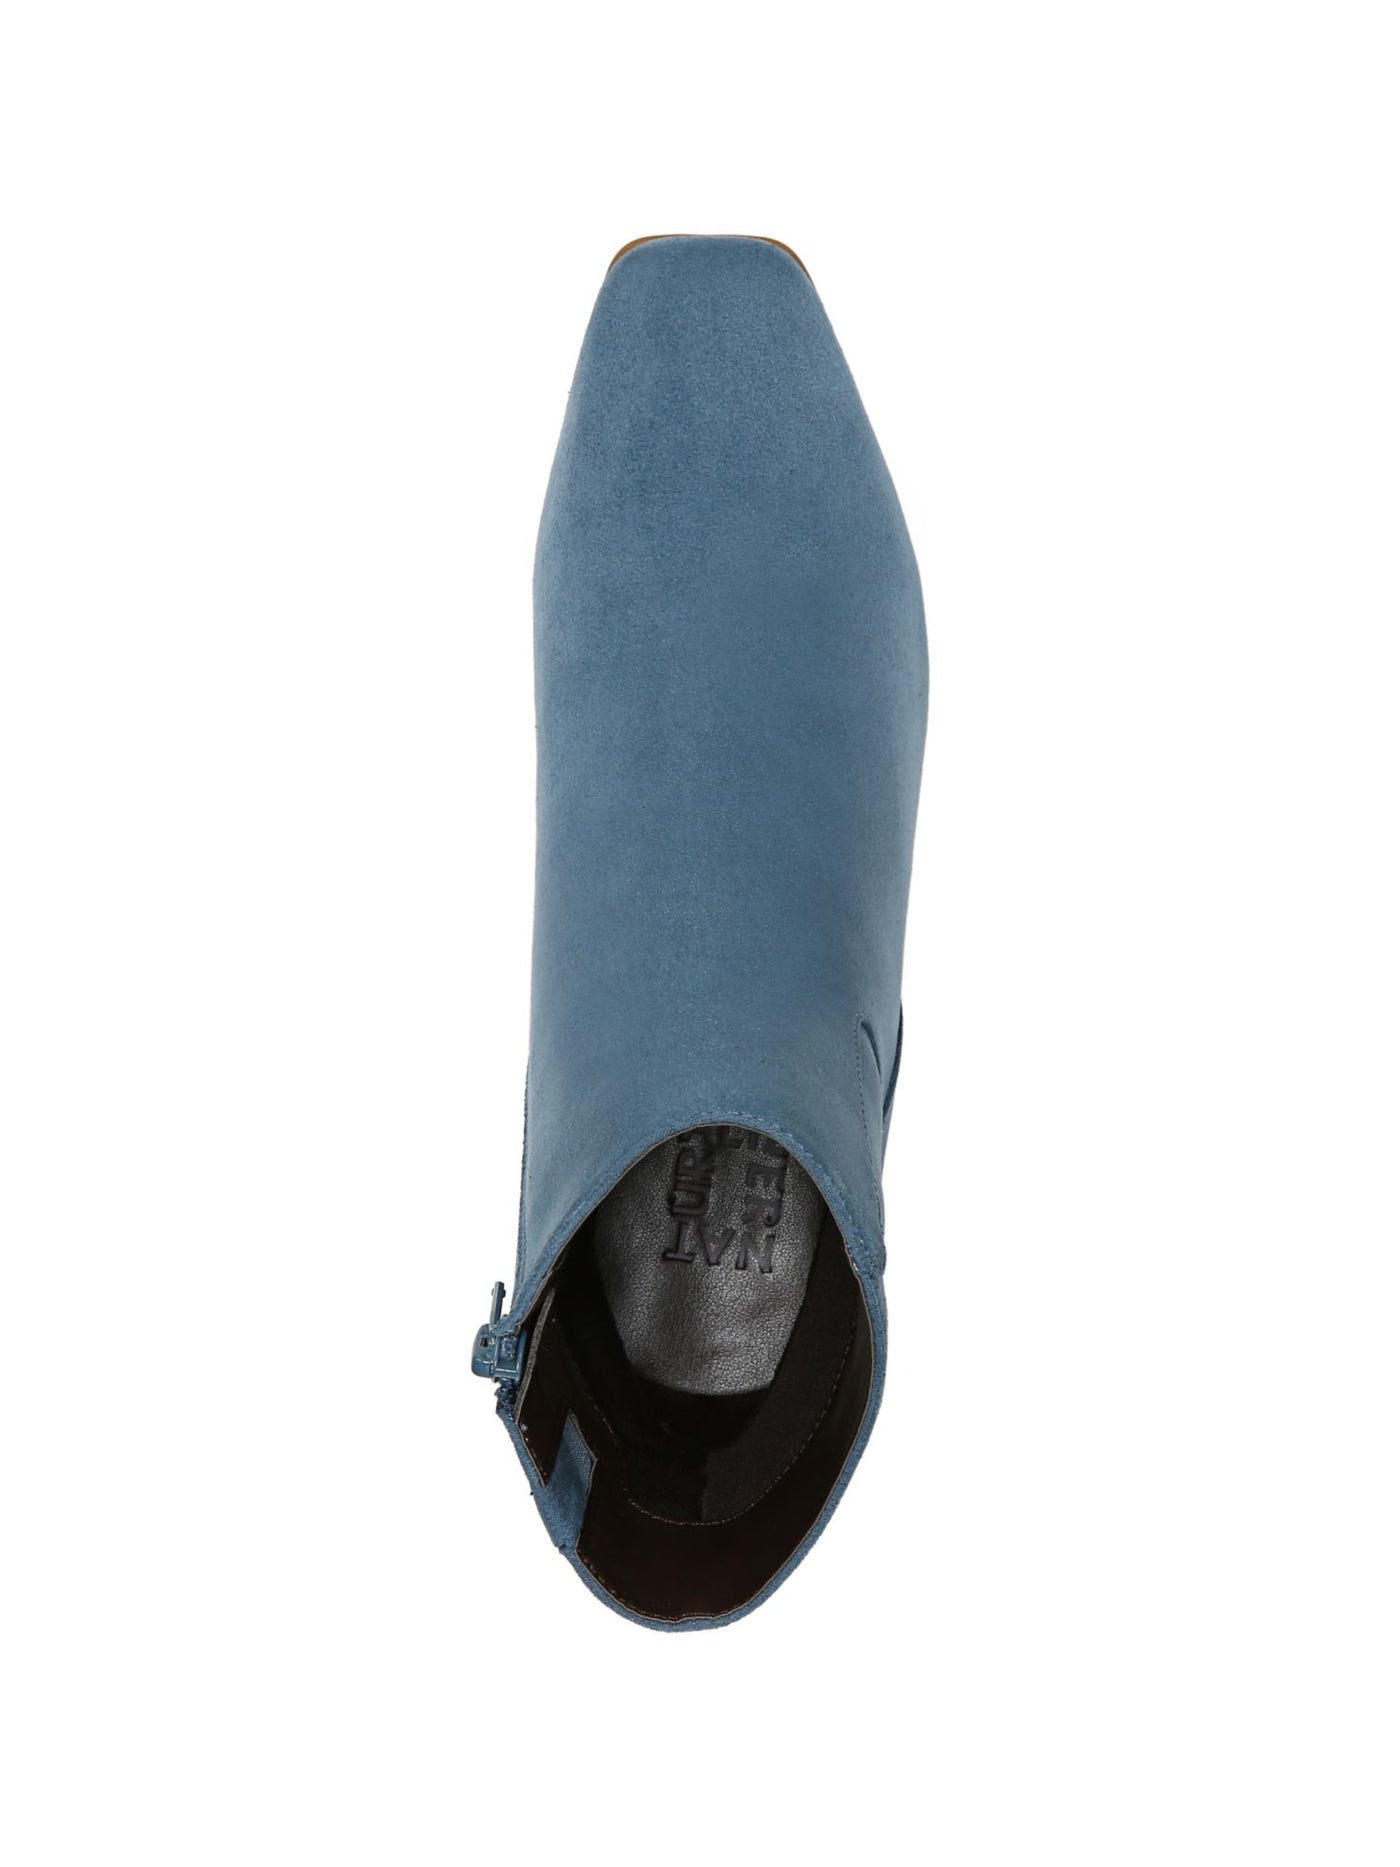 NATURALIZER Womens Blue Padded Wrenley Square Toe Block Heel Zip-Up Dress Booties 10 W